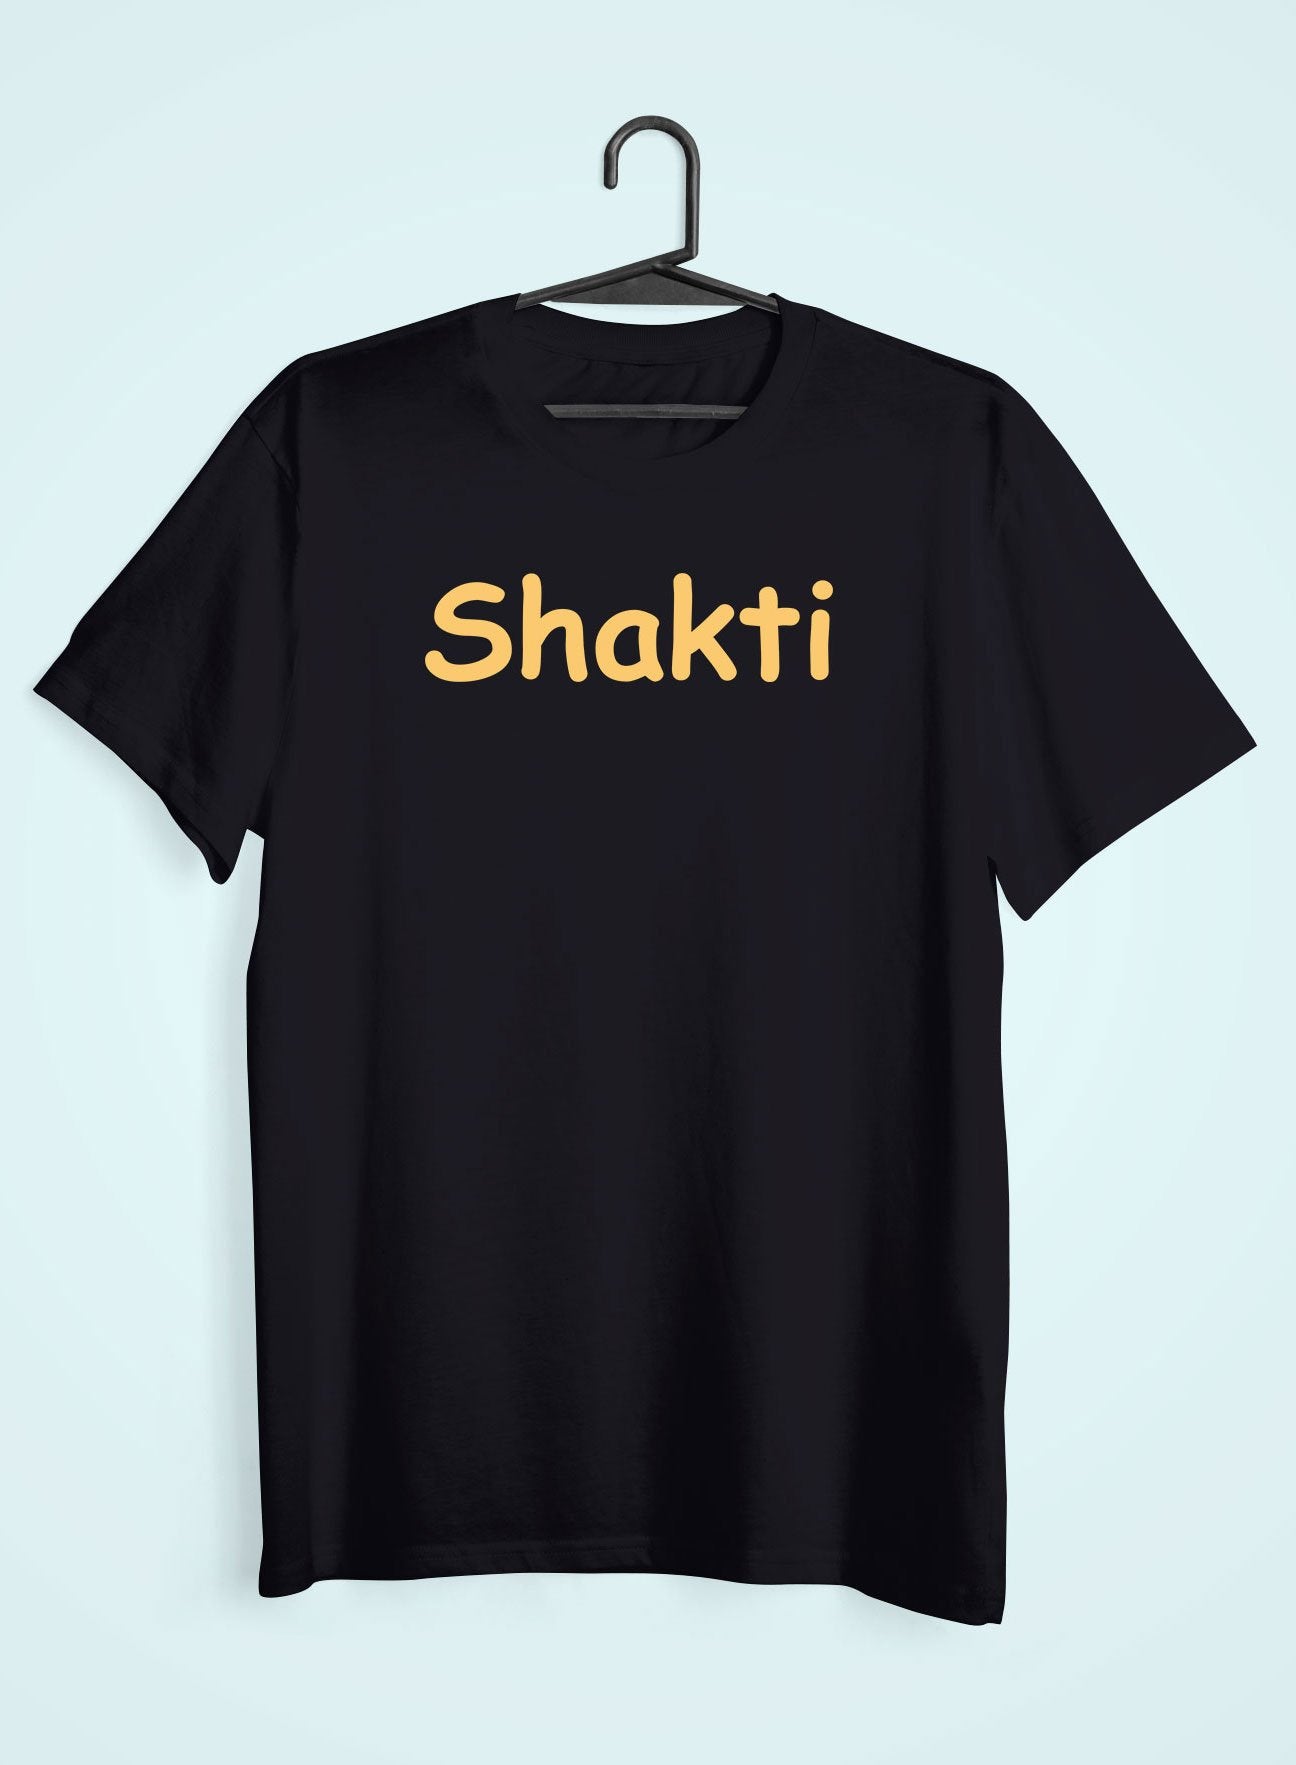 Sahan Shakti Couple Half Sleeves T-Shirts -FunkyTeesClub - Funky Tees Club